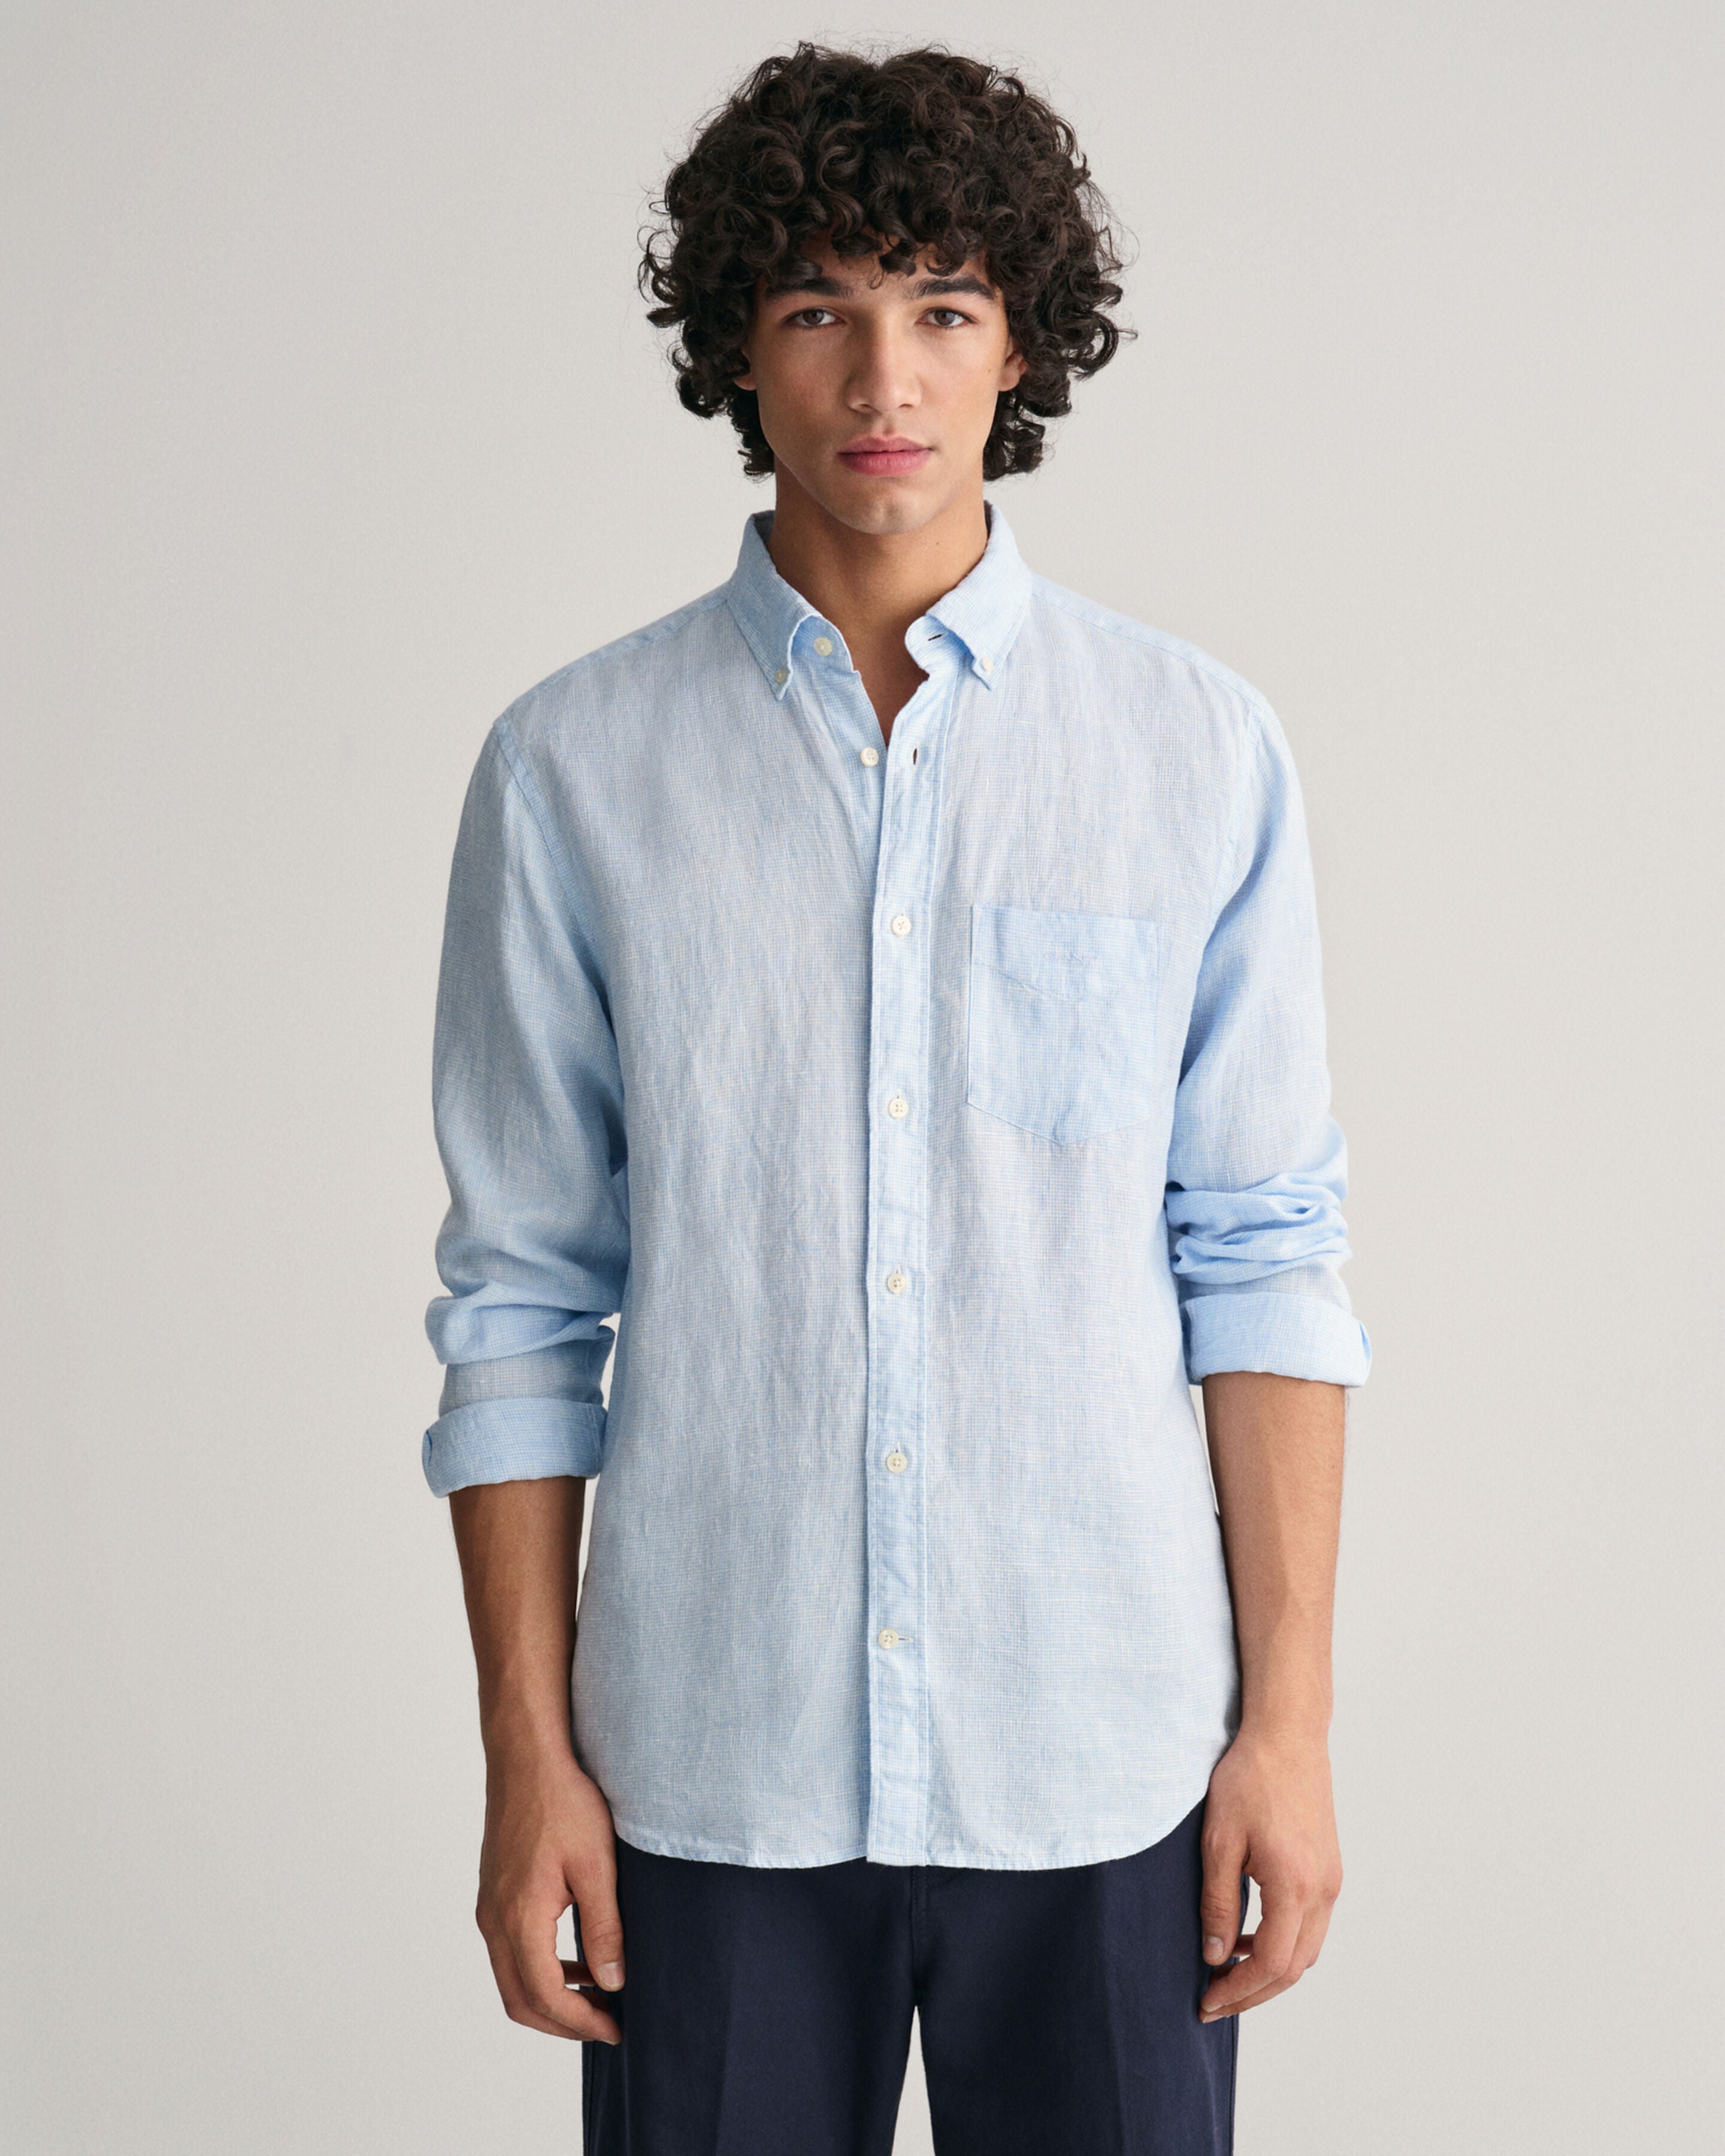 GANT - Regular Fit Houndstooth Linen Shirt in Capri Blue 3240067 468